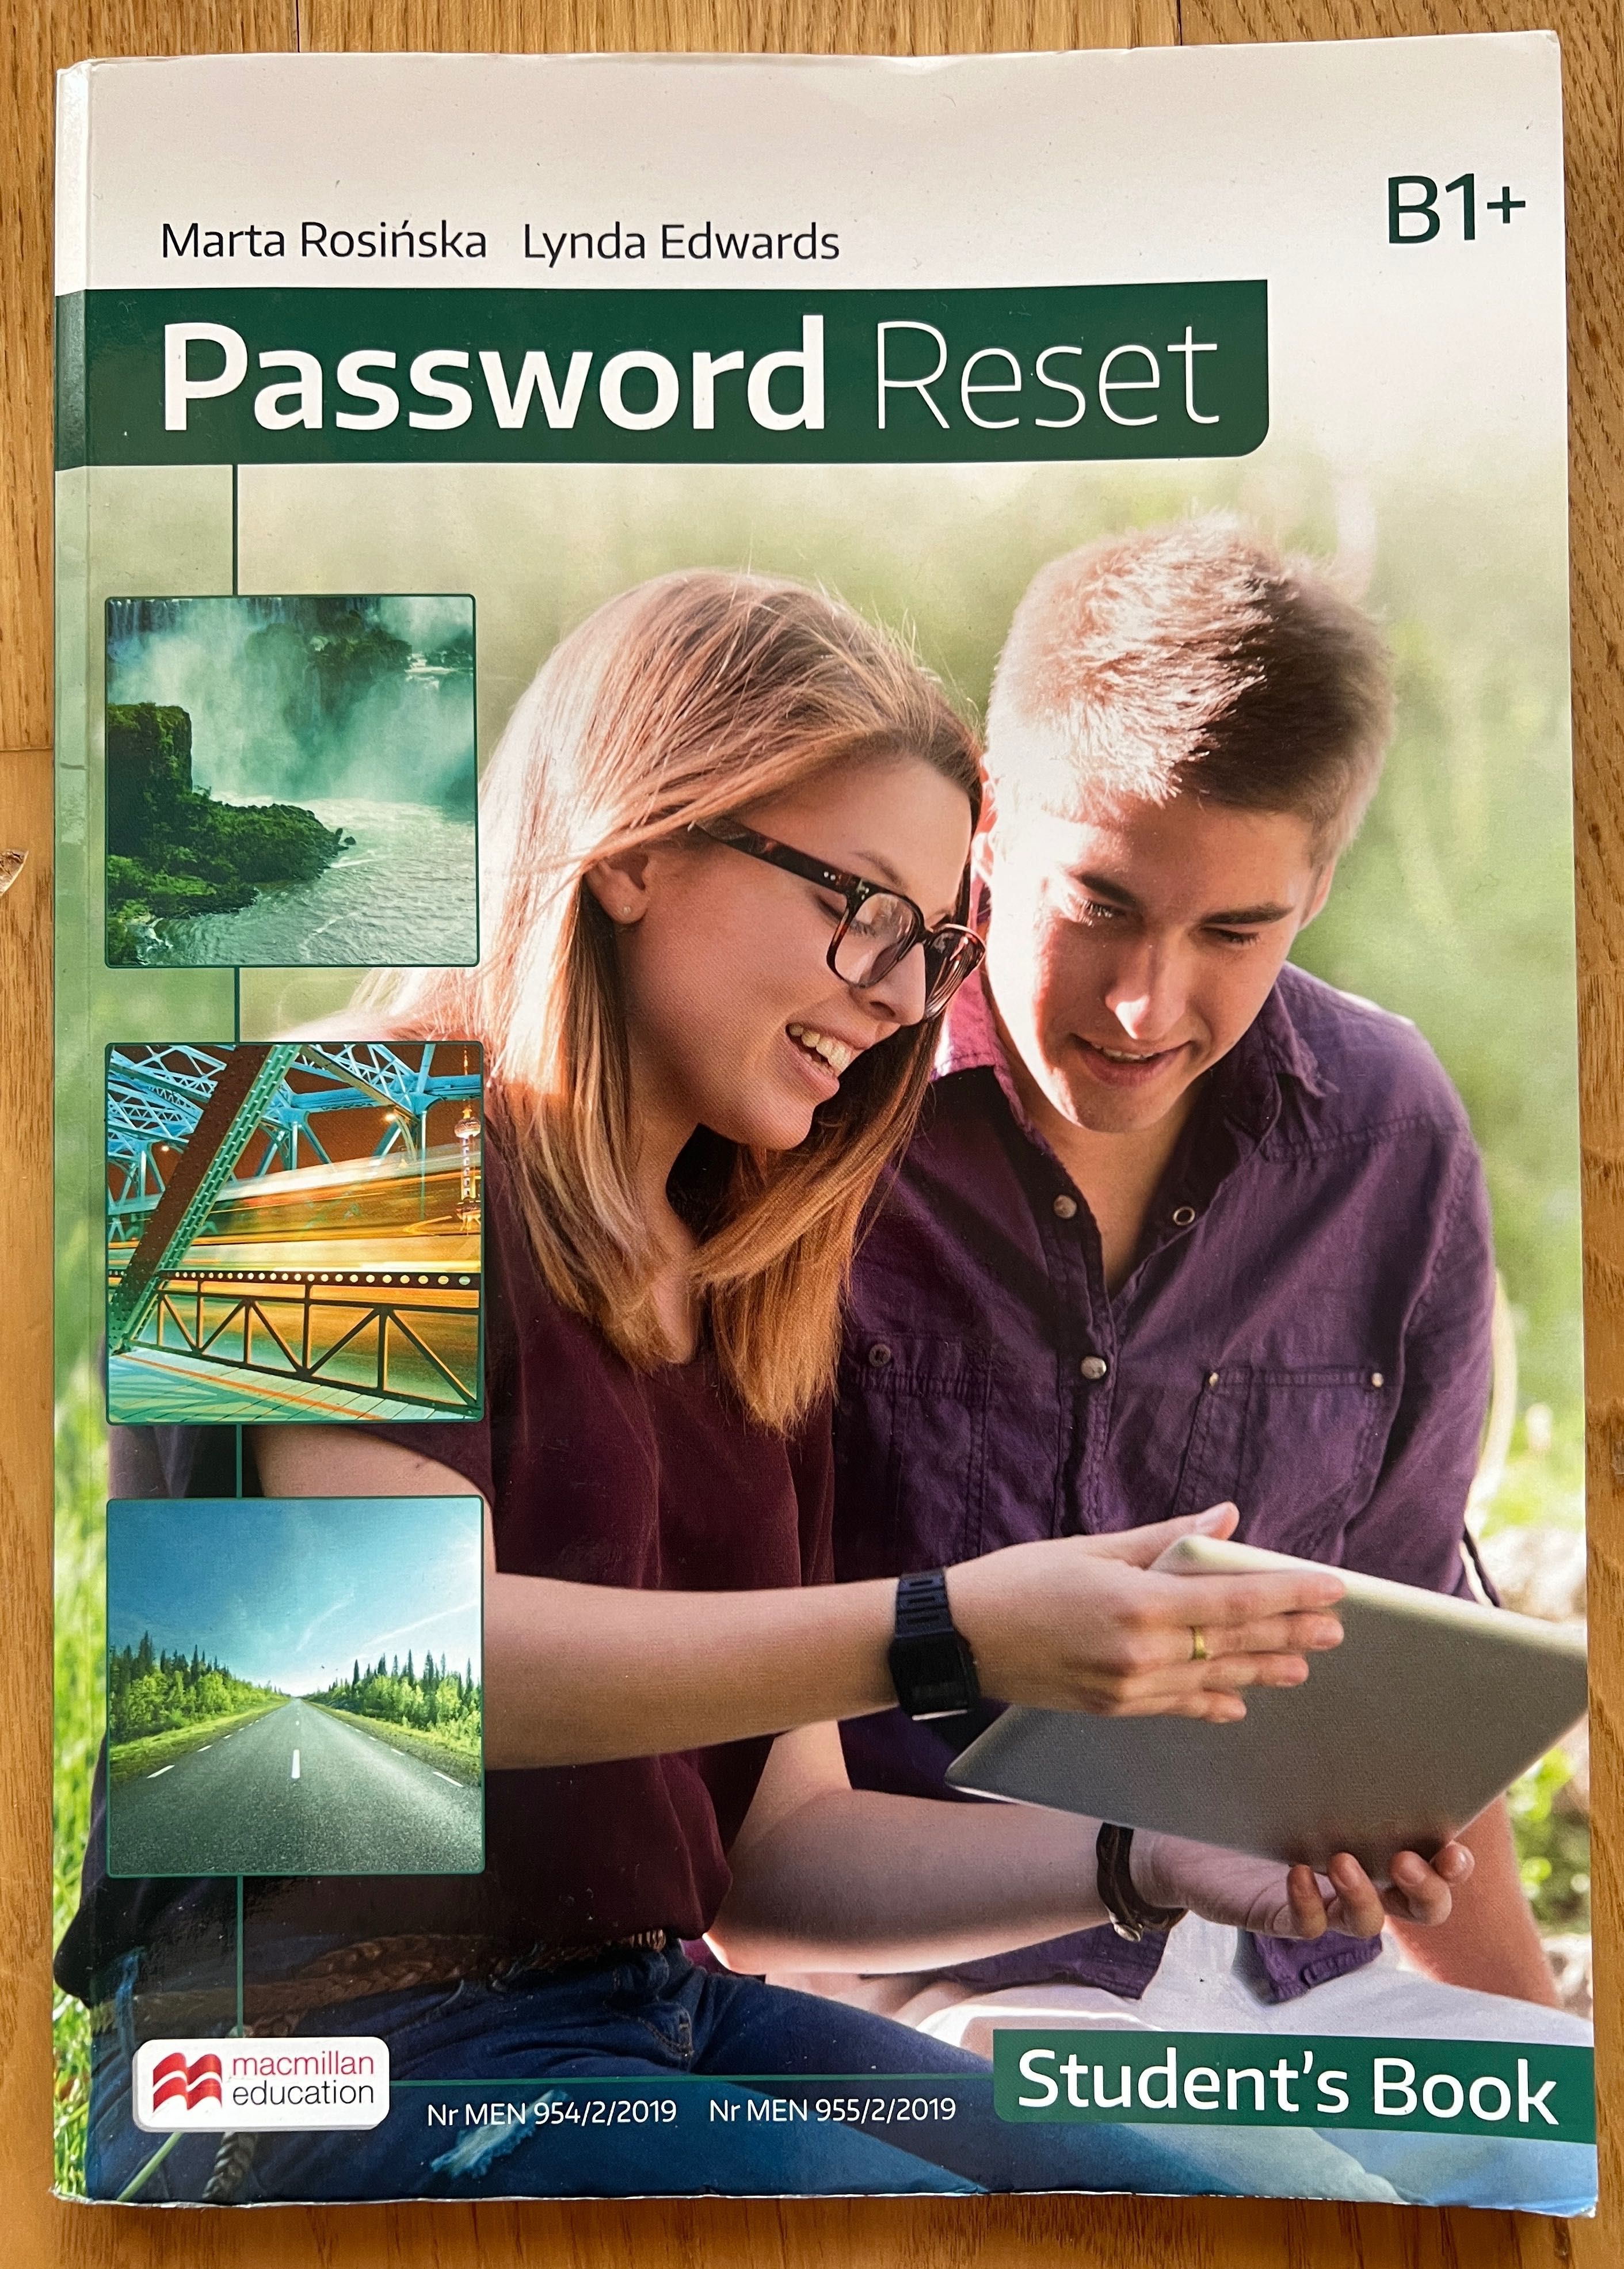 Podręcznik Password Reset B1+ wyd. macmillan education